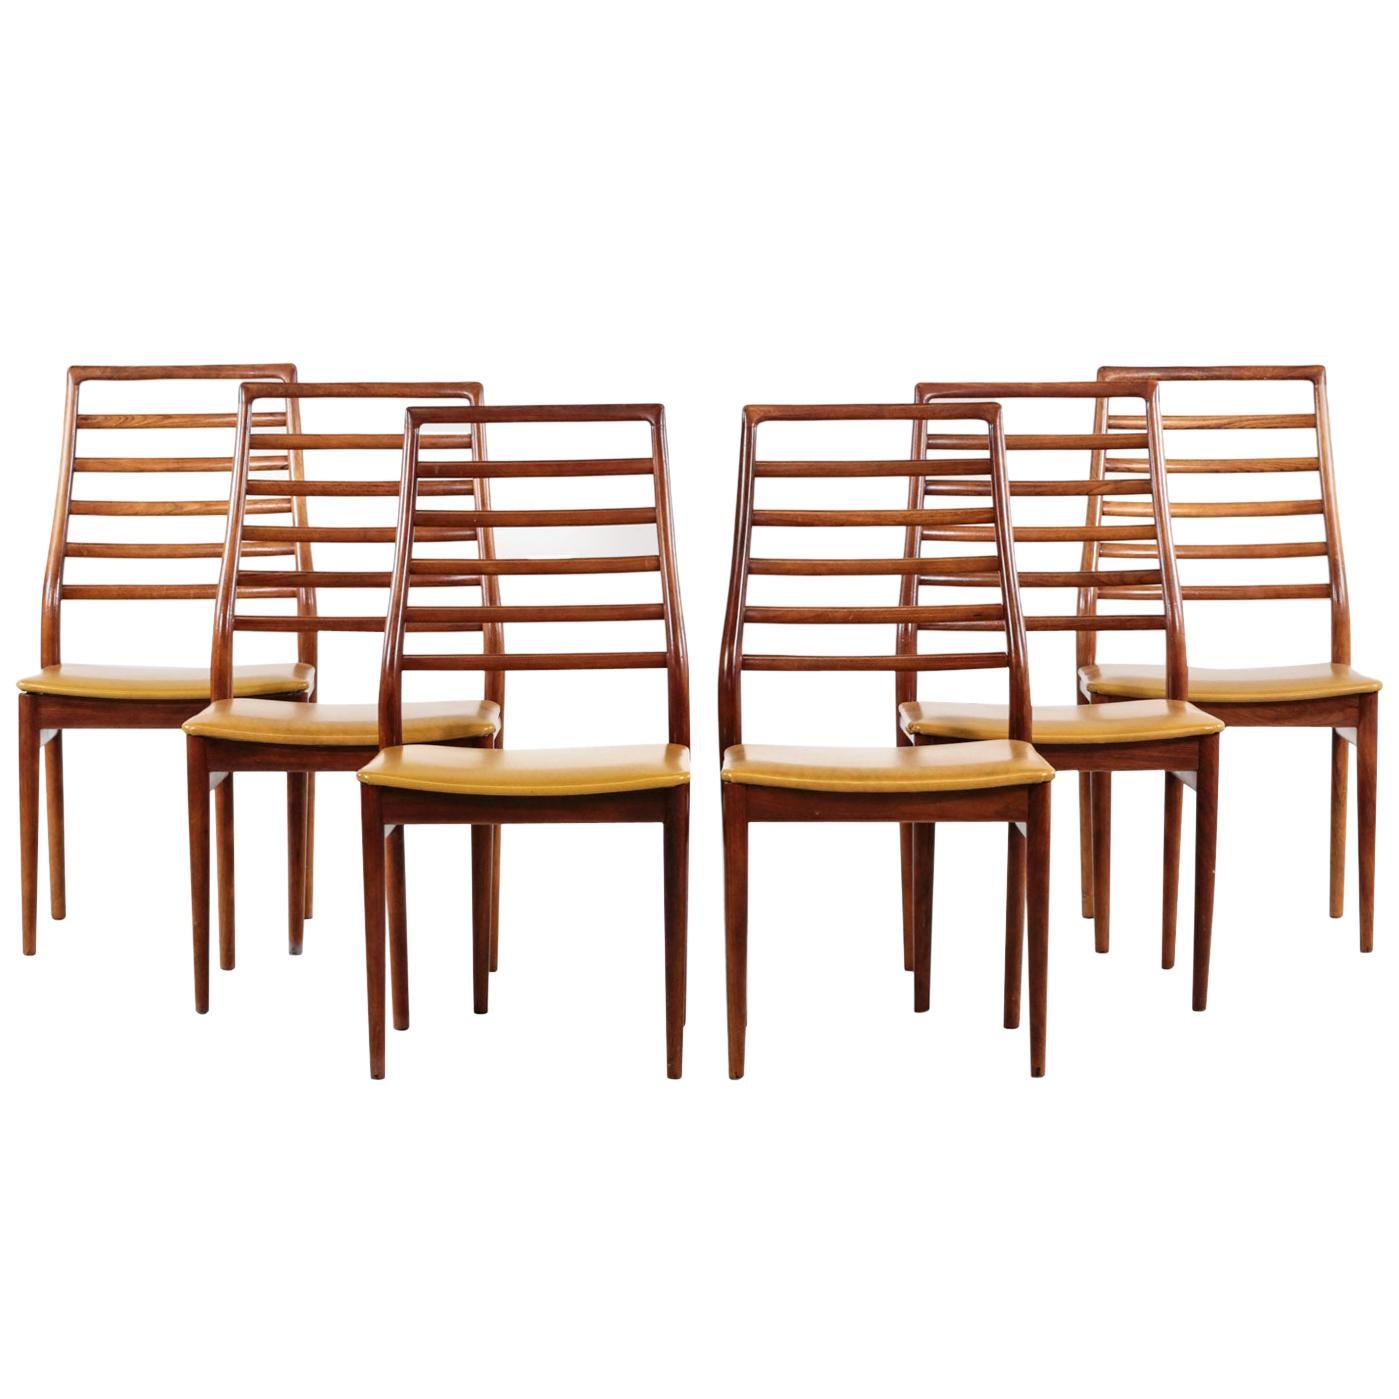 Set of 6 Danish Dining Chairs Scandinavian Design